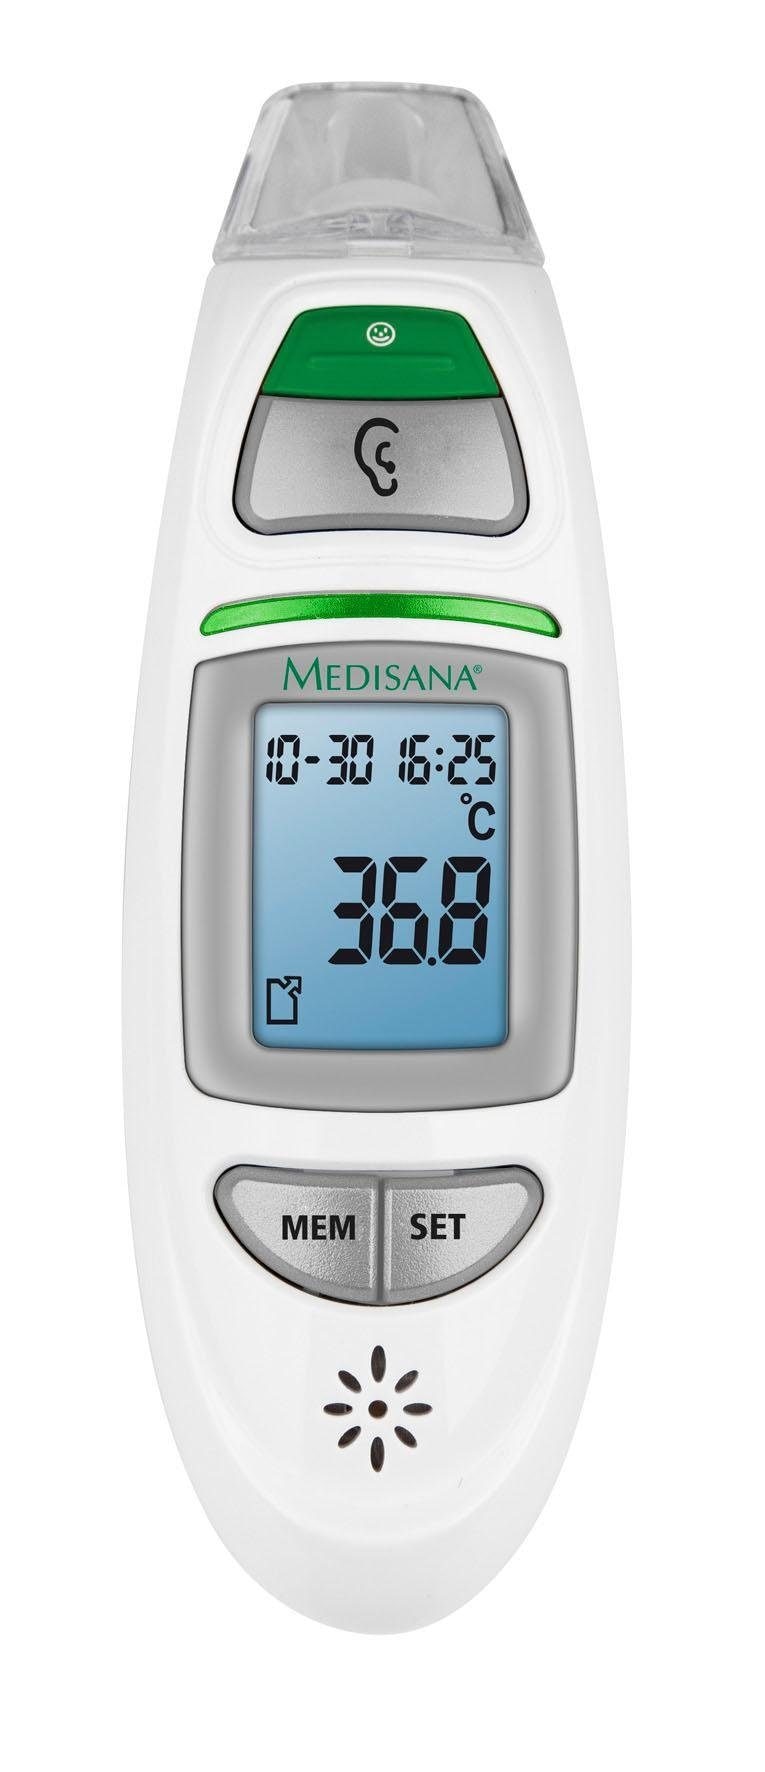 Medisana %Sale »TM 750« im Infrarot-Fieberthermometer jetzt